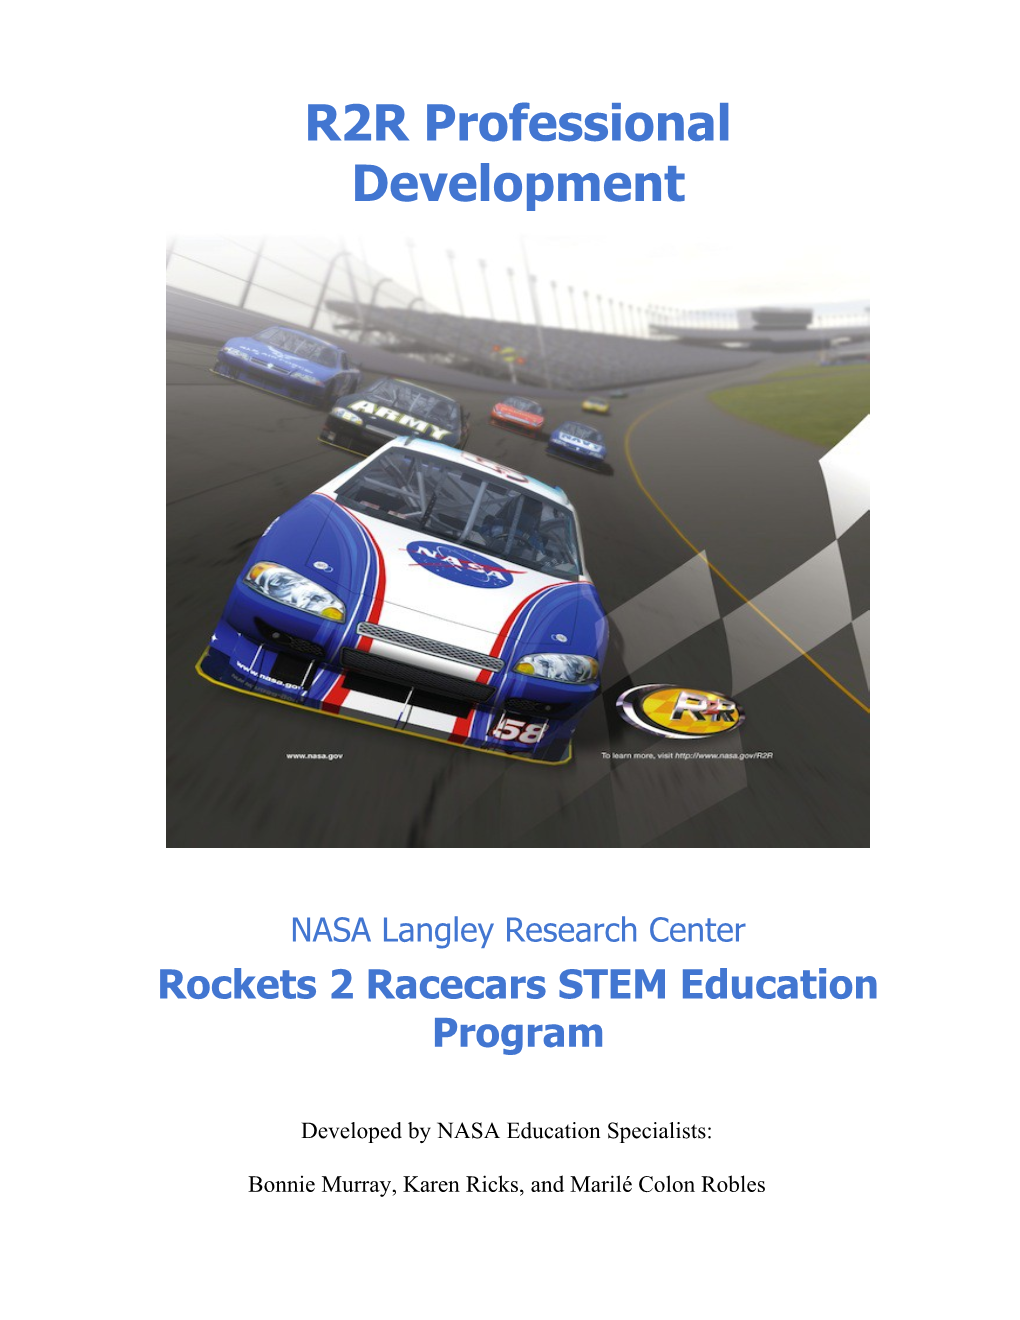 Rockets 2 Racecars STEM Education Program